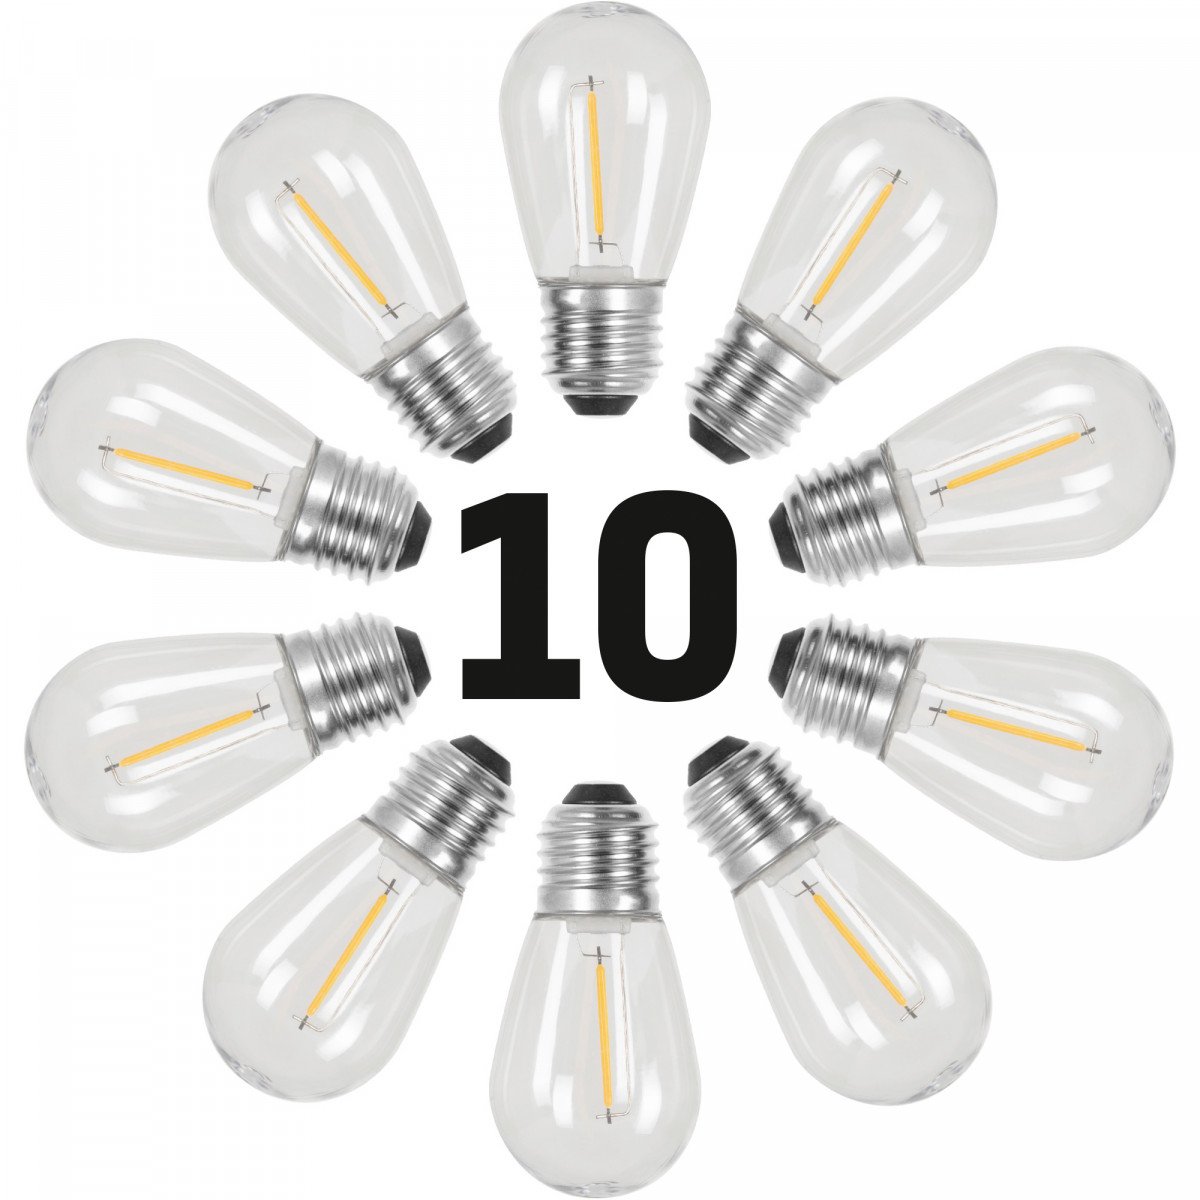 10er Pak I-Led Leuchtmittel 12v für die Lichterkette Party